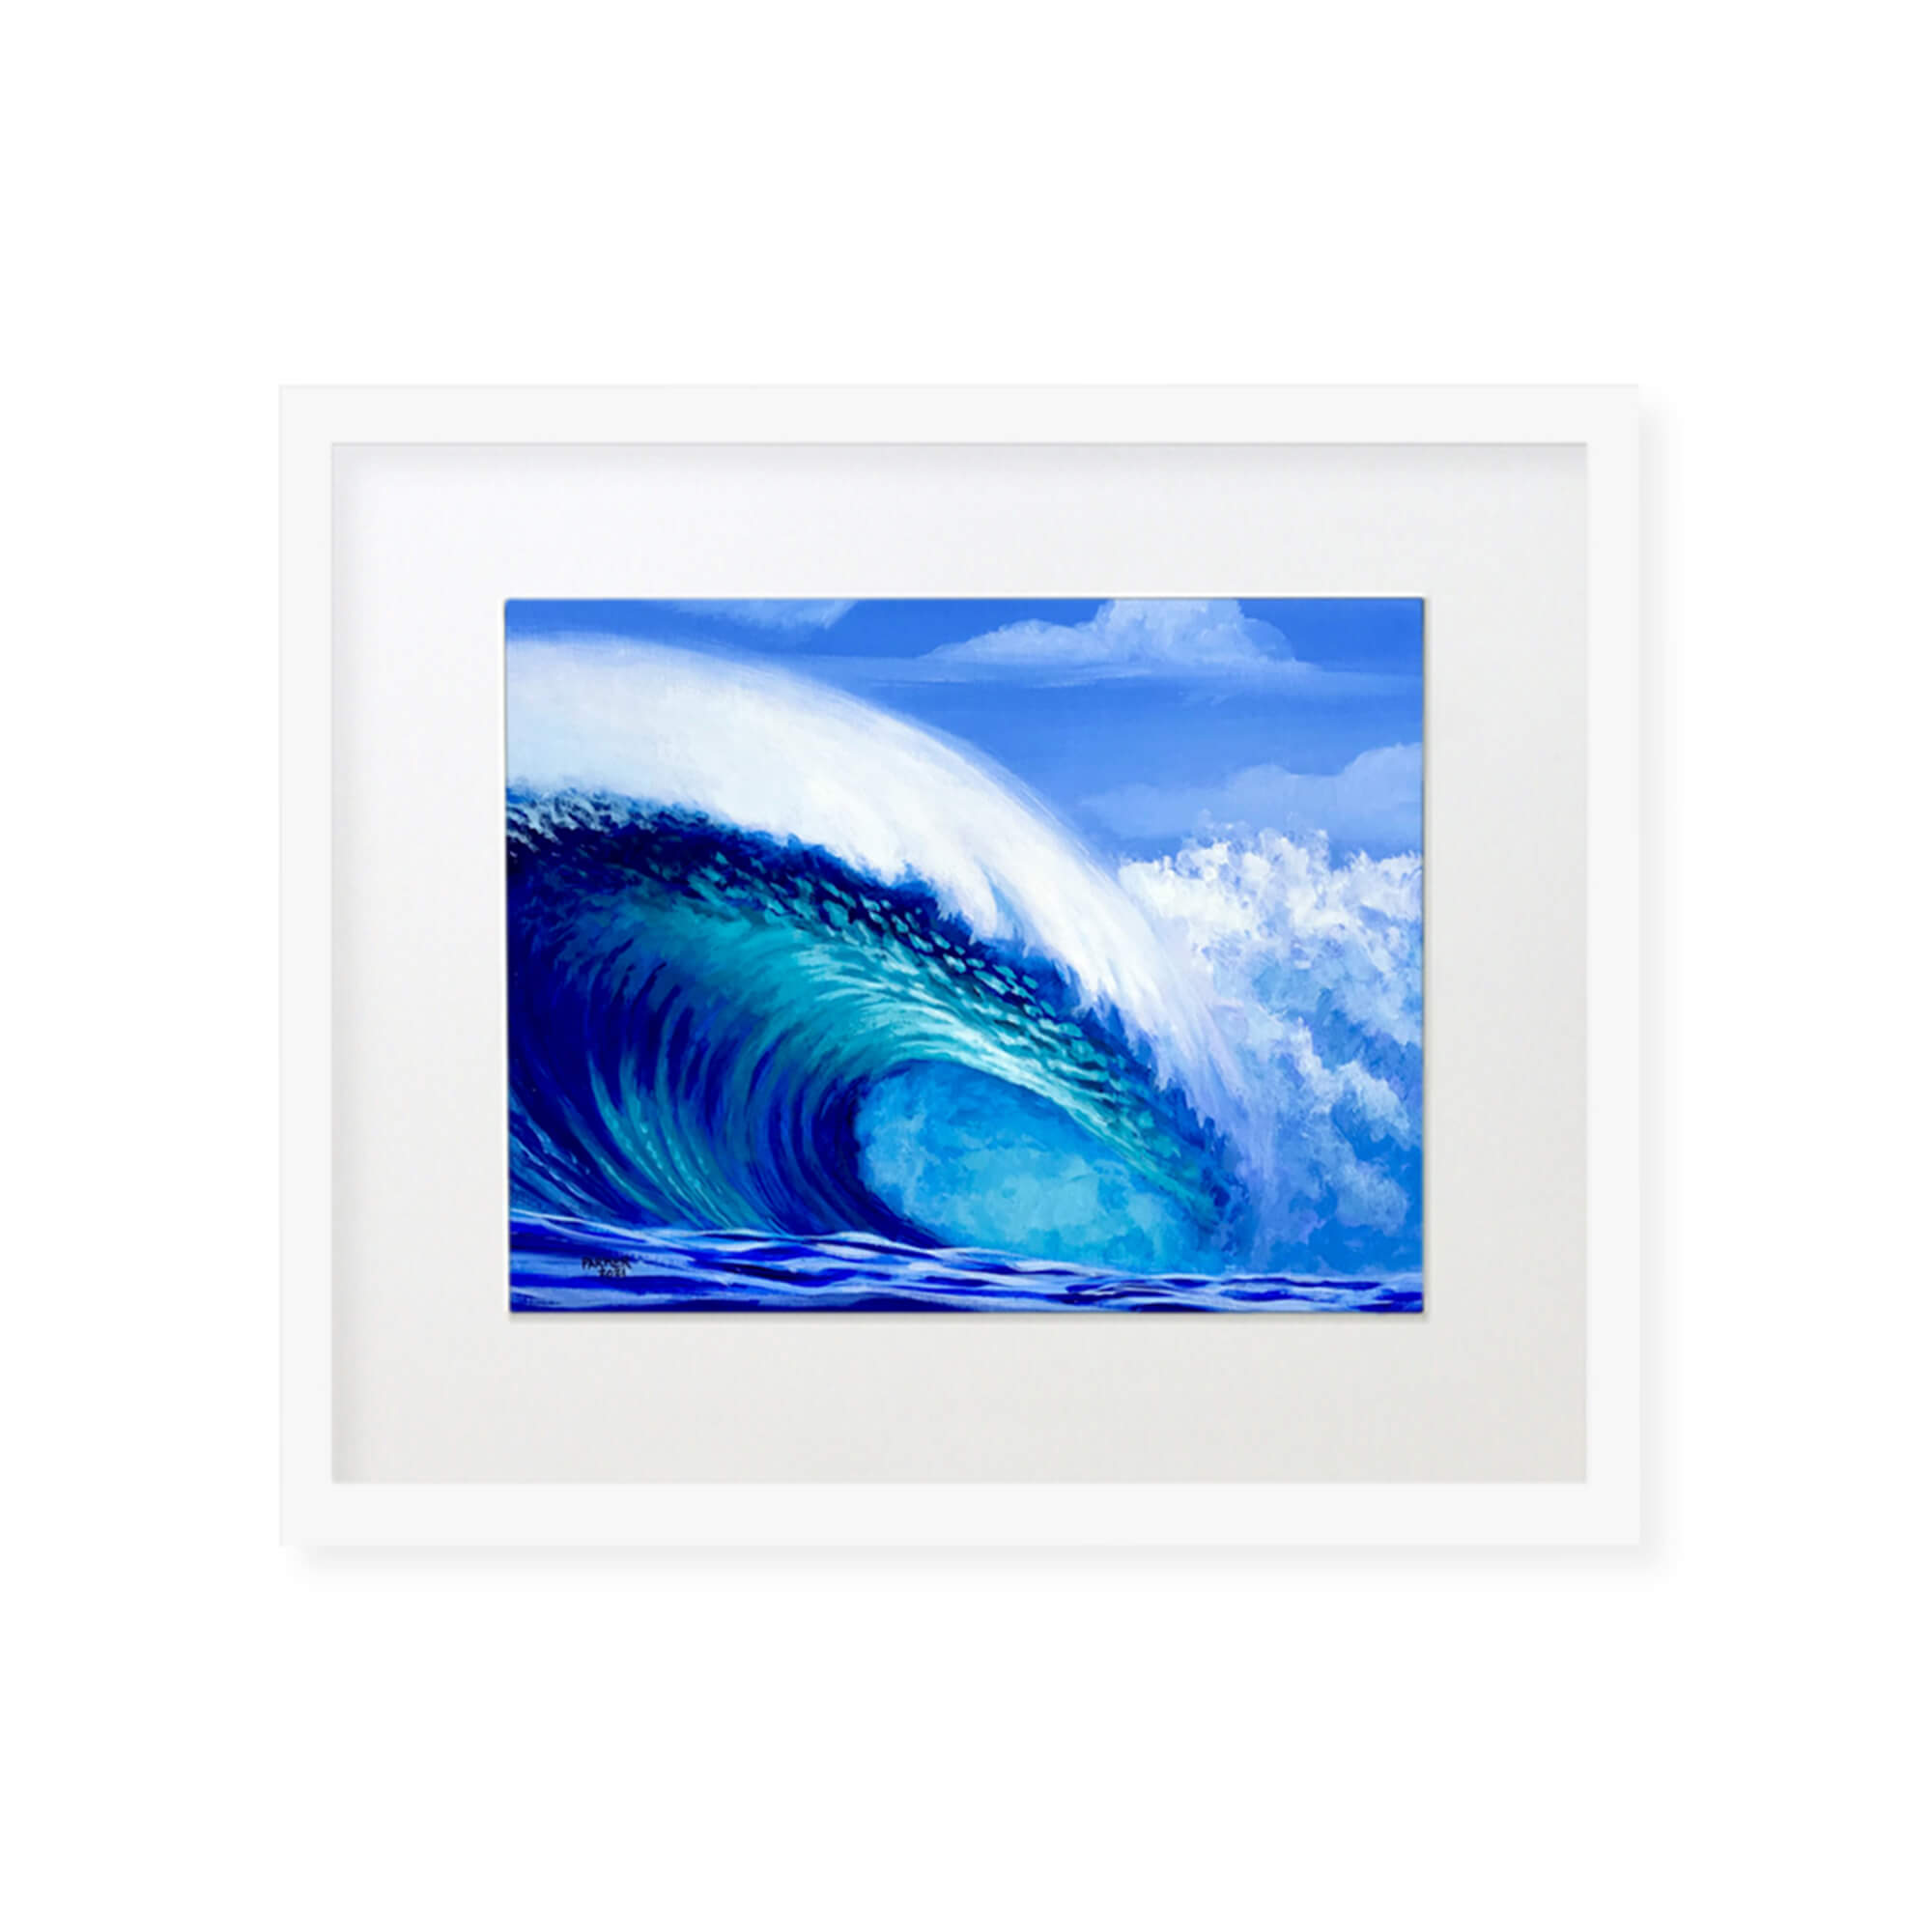 A framed original artwork features a large crashing blue wave by Maui artist Patrick Parker